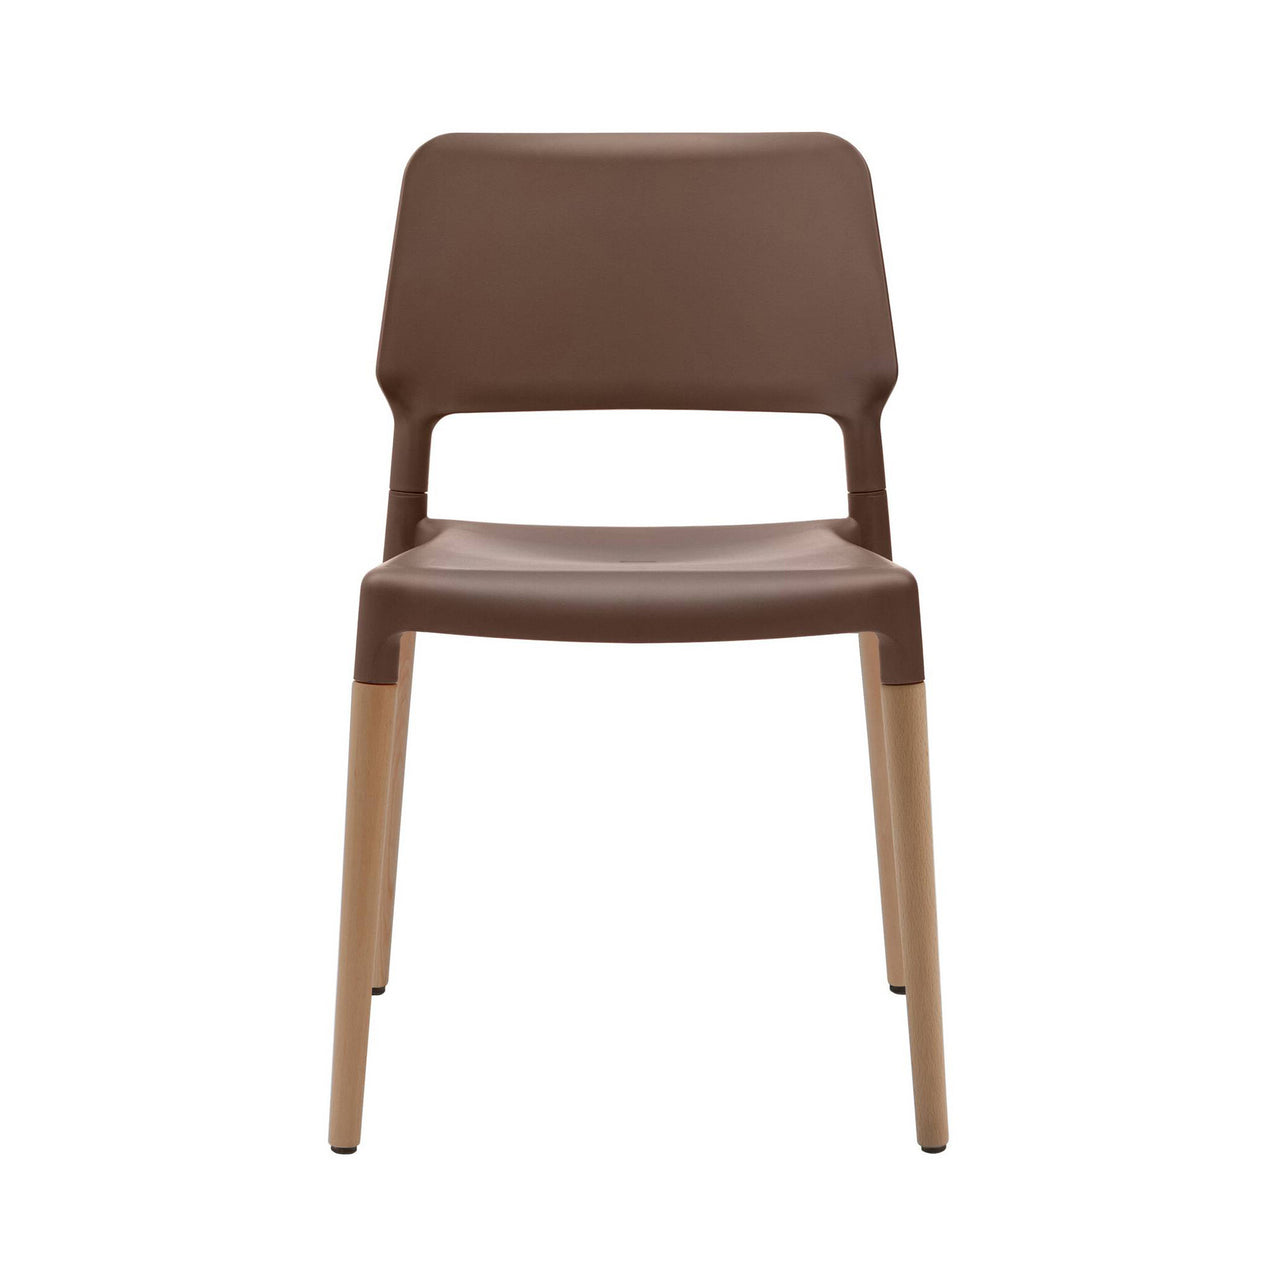 Belloch Chair: Brown